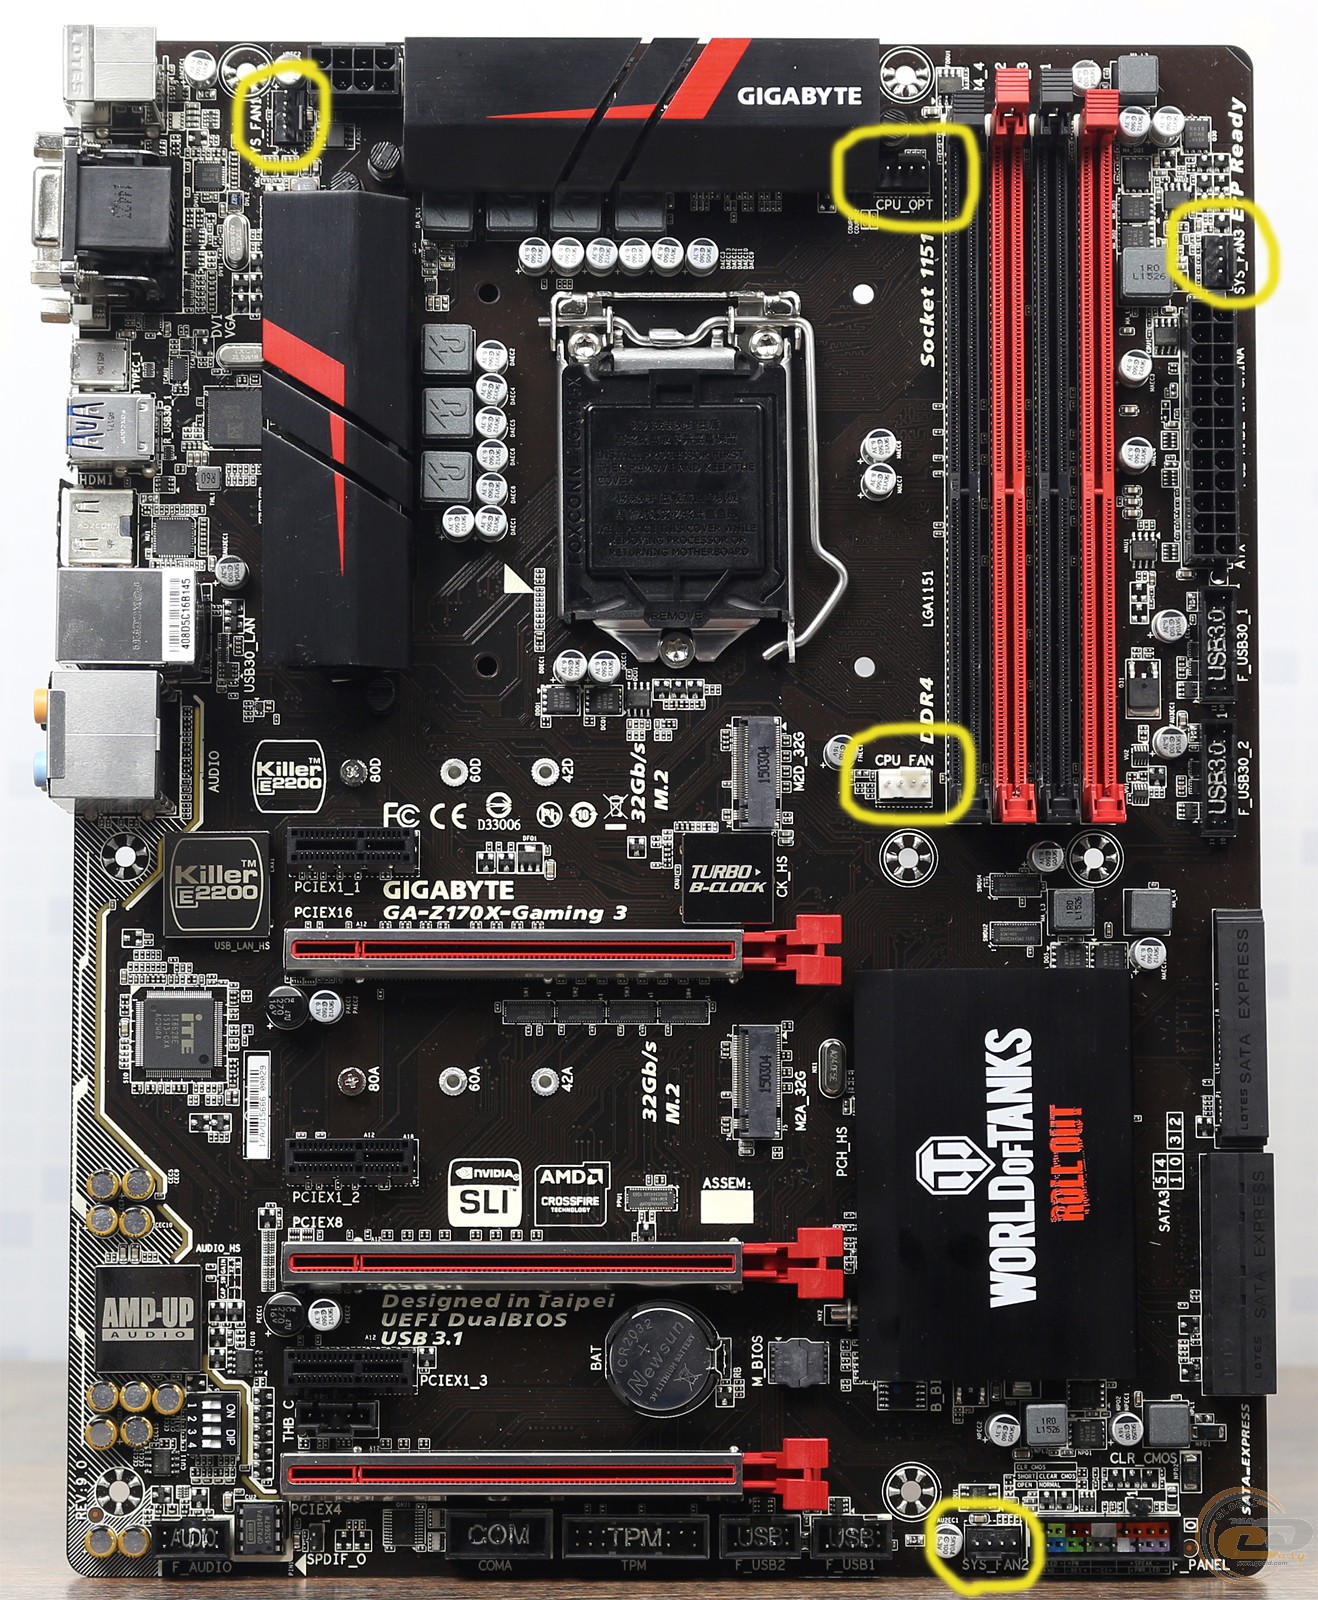 Review of motherboard GIGABYTE GA-Z170X-Gaming 3 on Intel Z170. GECID.com